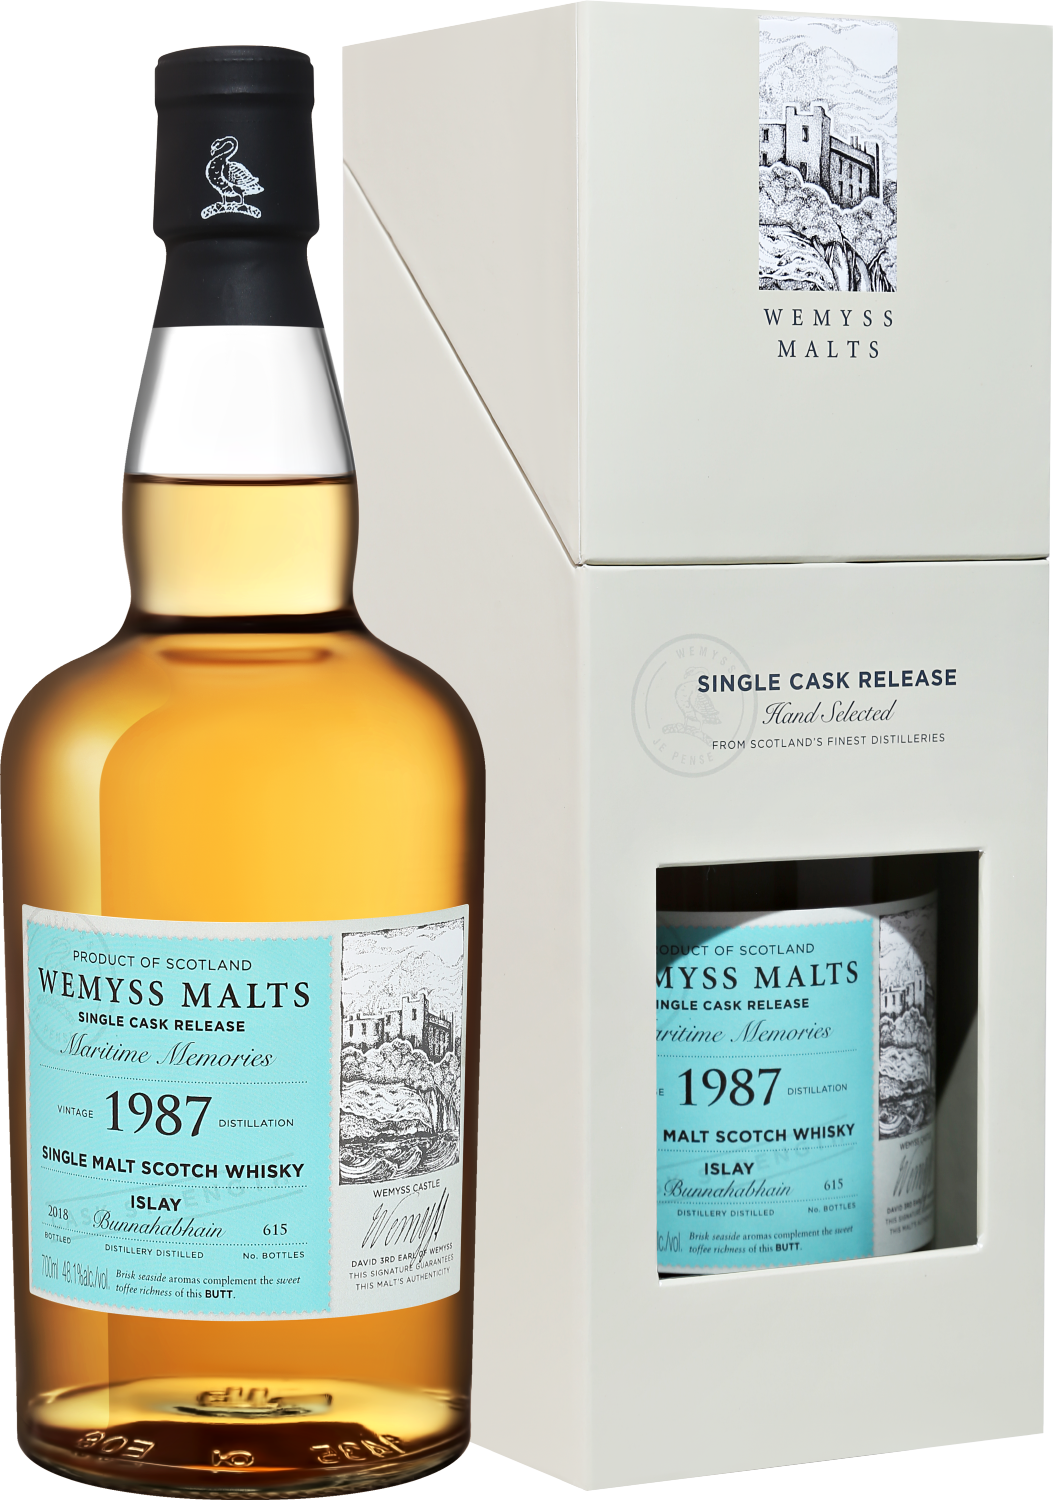 Wemyss Malts Maritime Memories Bunnahabhain 1987 Islay Single Cask Single Malt Scotch Whisky (gift box) 55038